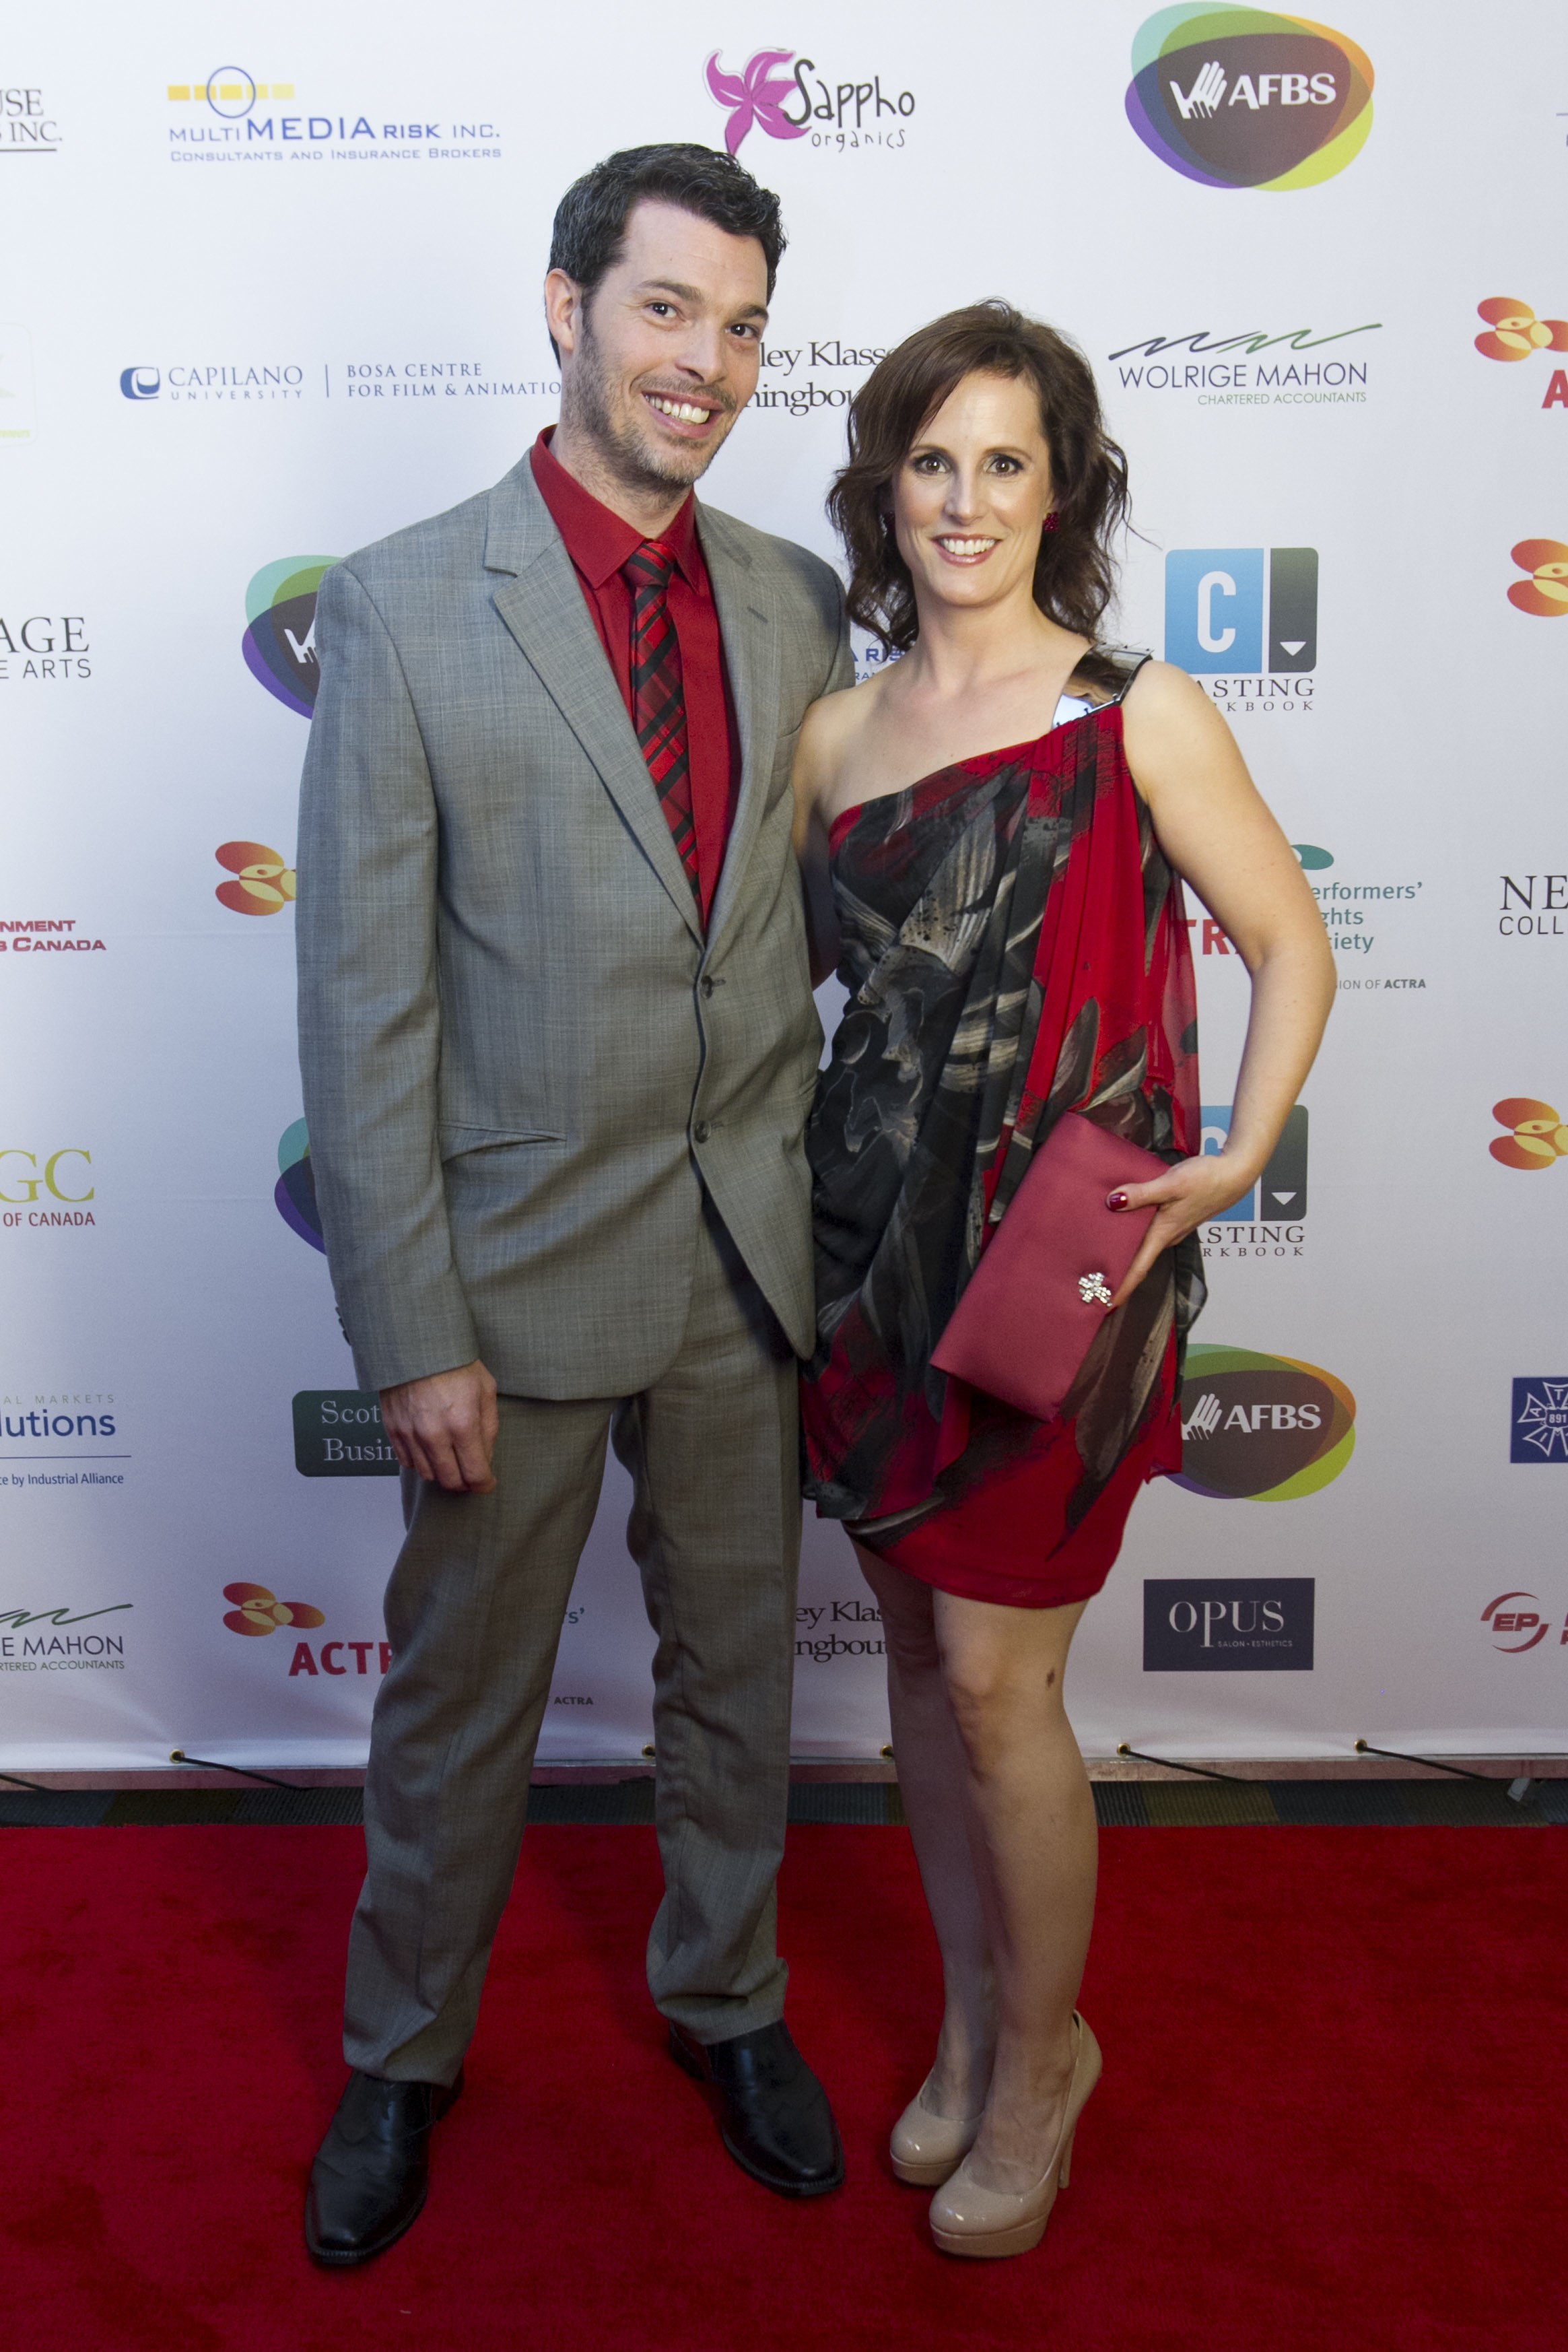 Enid-Raye Adams and husband Bryce Norman at 2013 UBCP/Actra Awards.